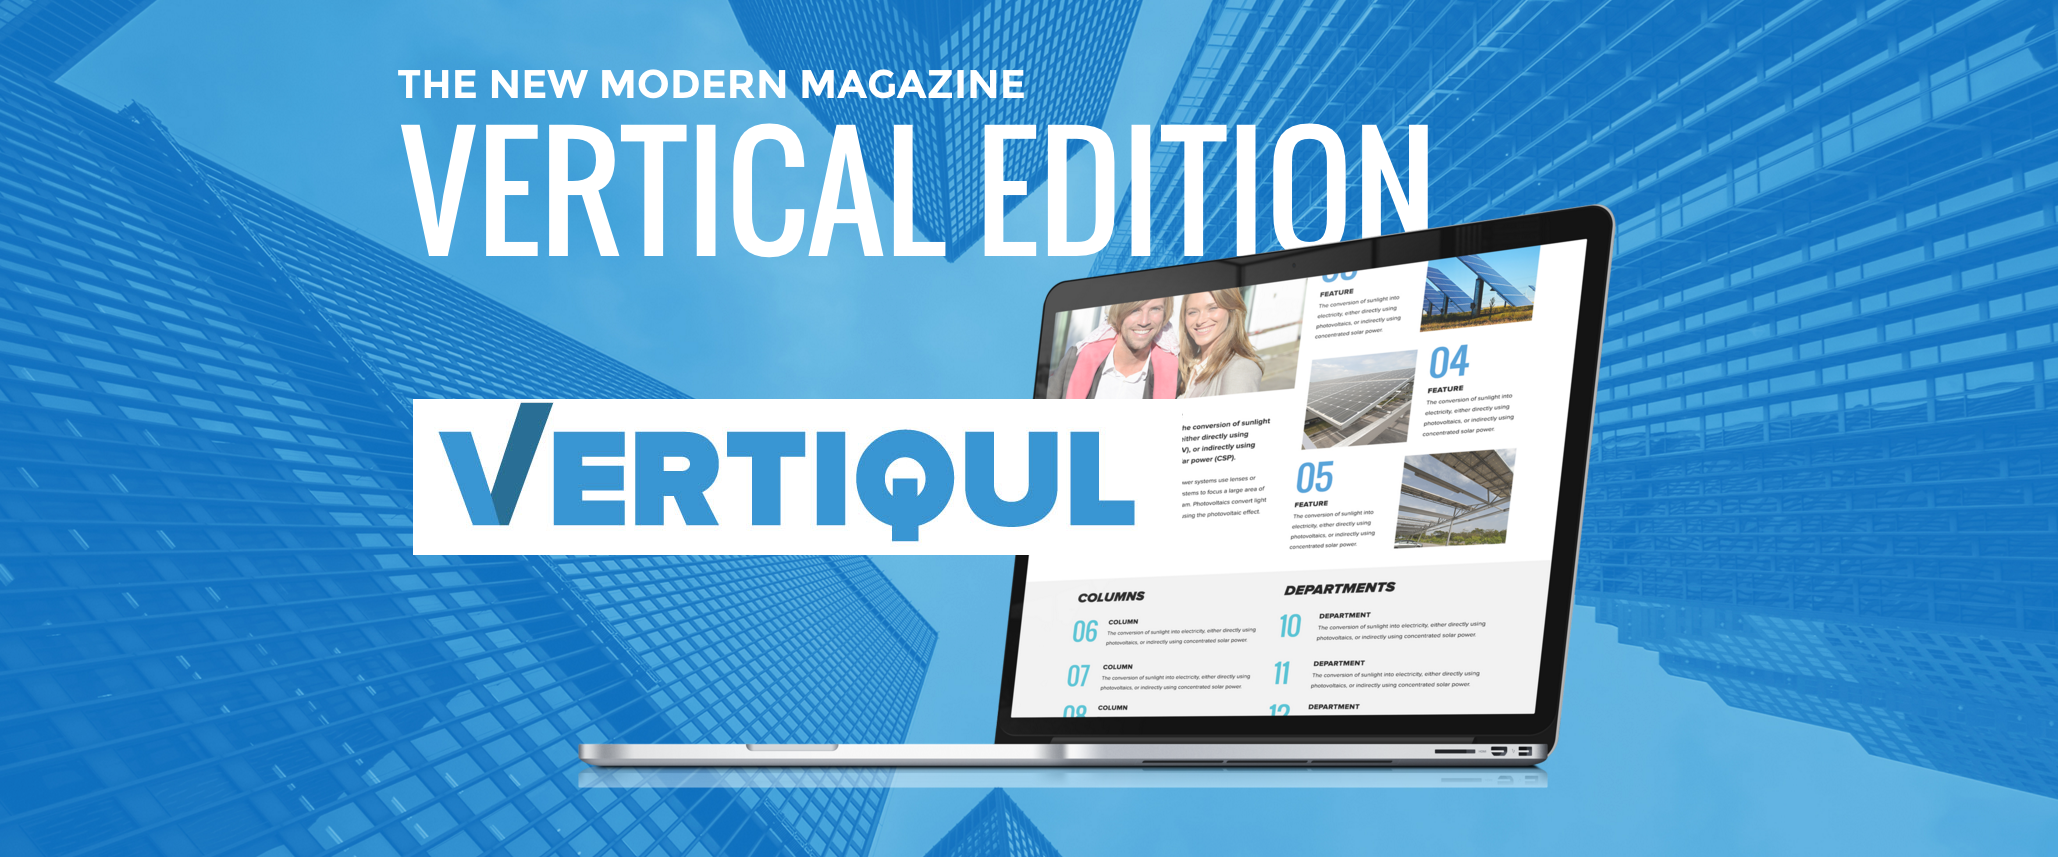 Magazine Web Design Firm Advontemedia Launches Vertical Digital Magazines